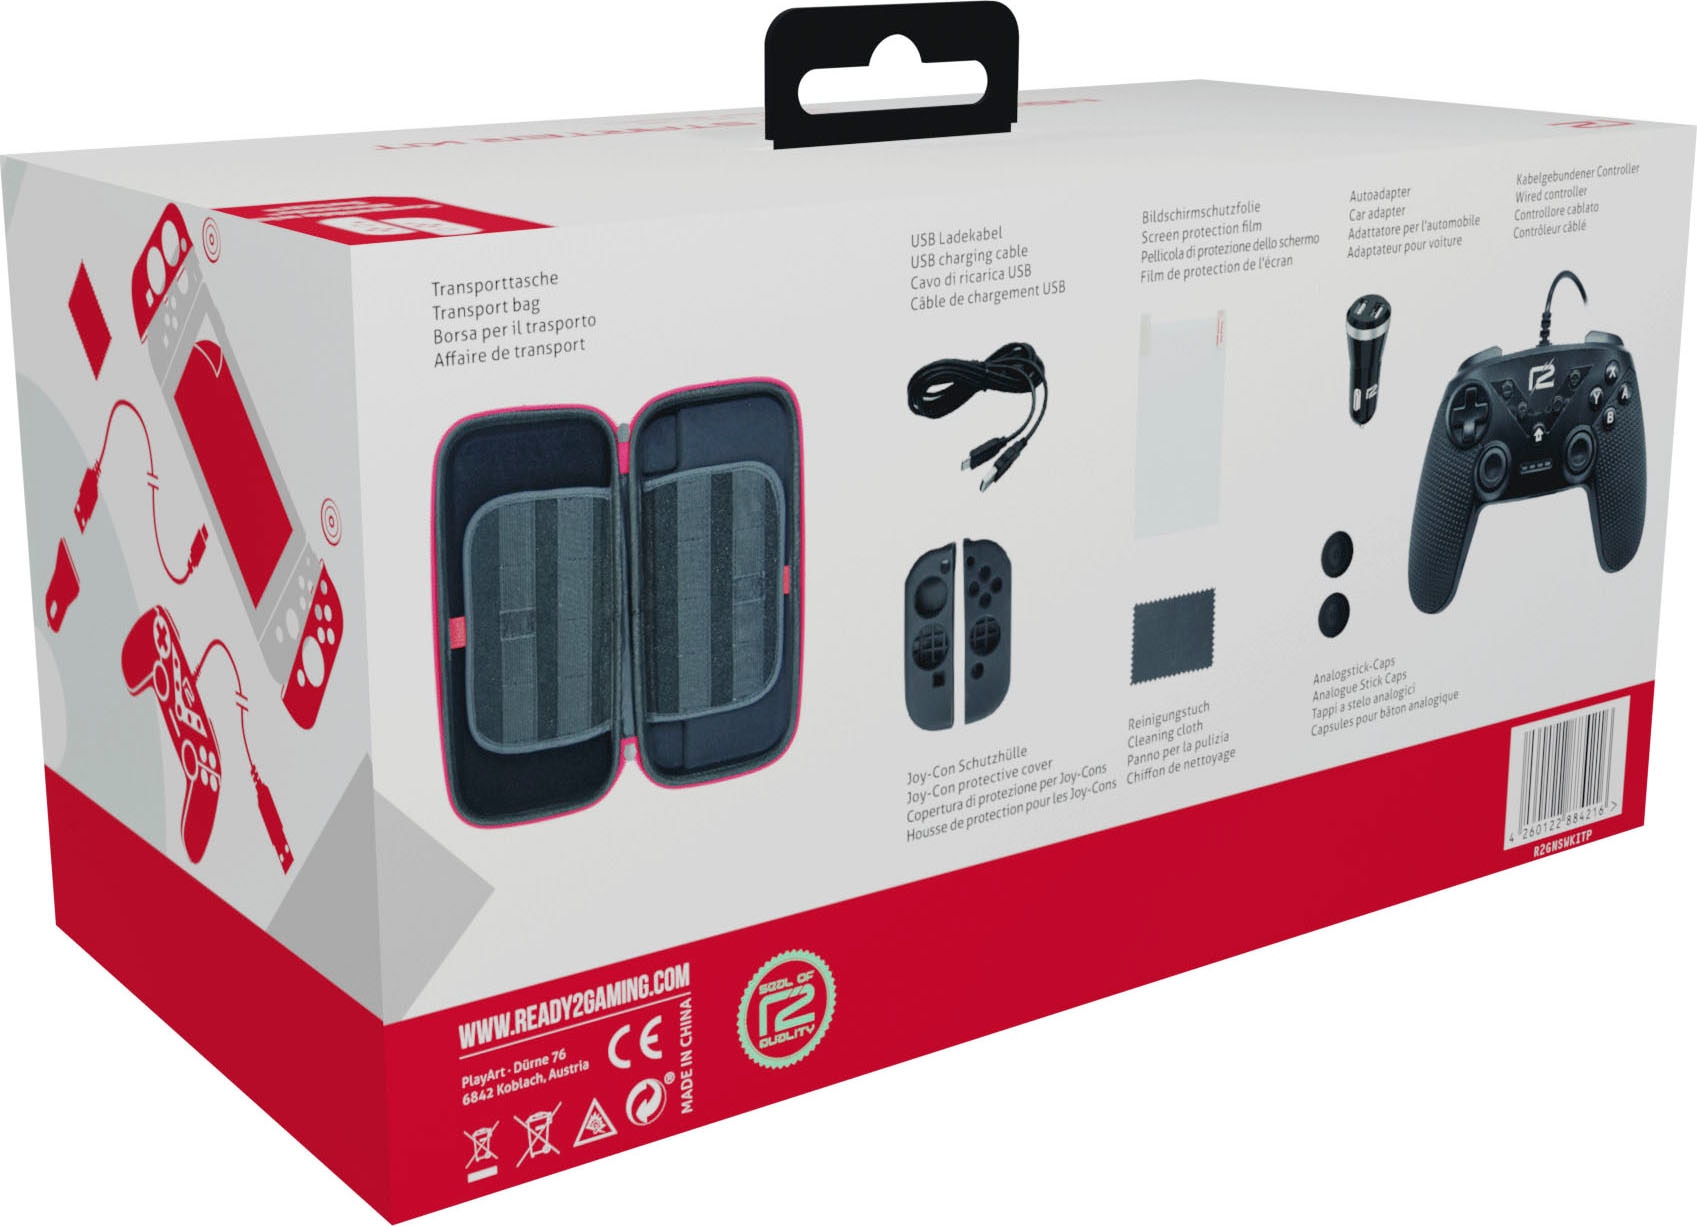 Ready2gaming Nintendo-Controller »Nintendo Switch Premium Starter Kit«  jetzt online bei OTTO